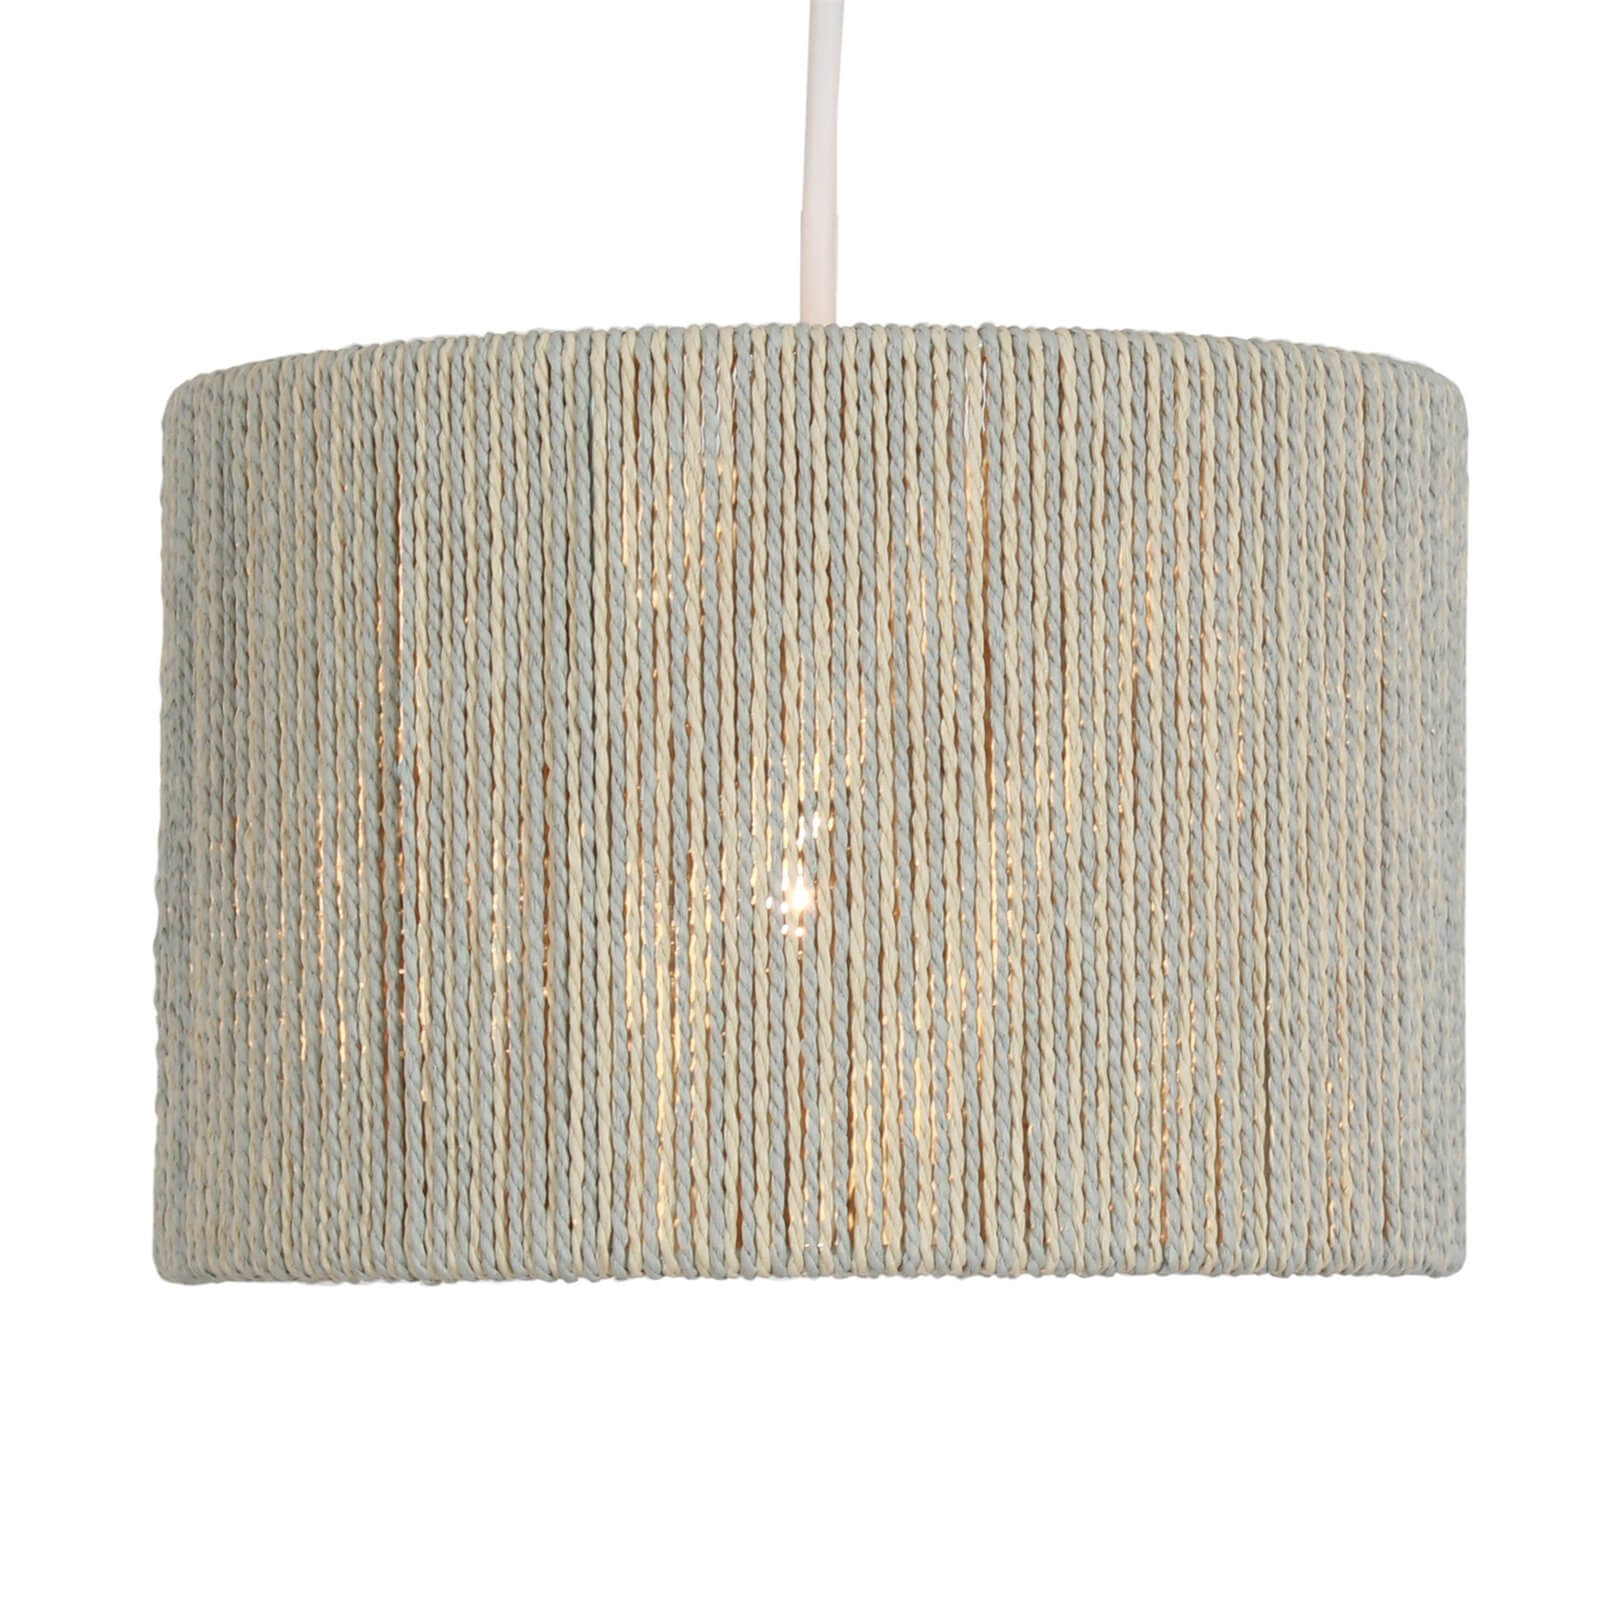 Lexi String Lamp Shade - Grey & Ivory - 25cm